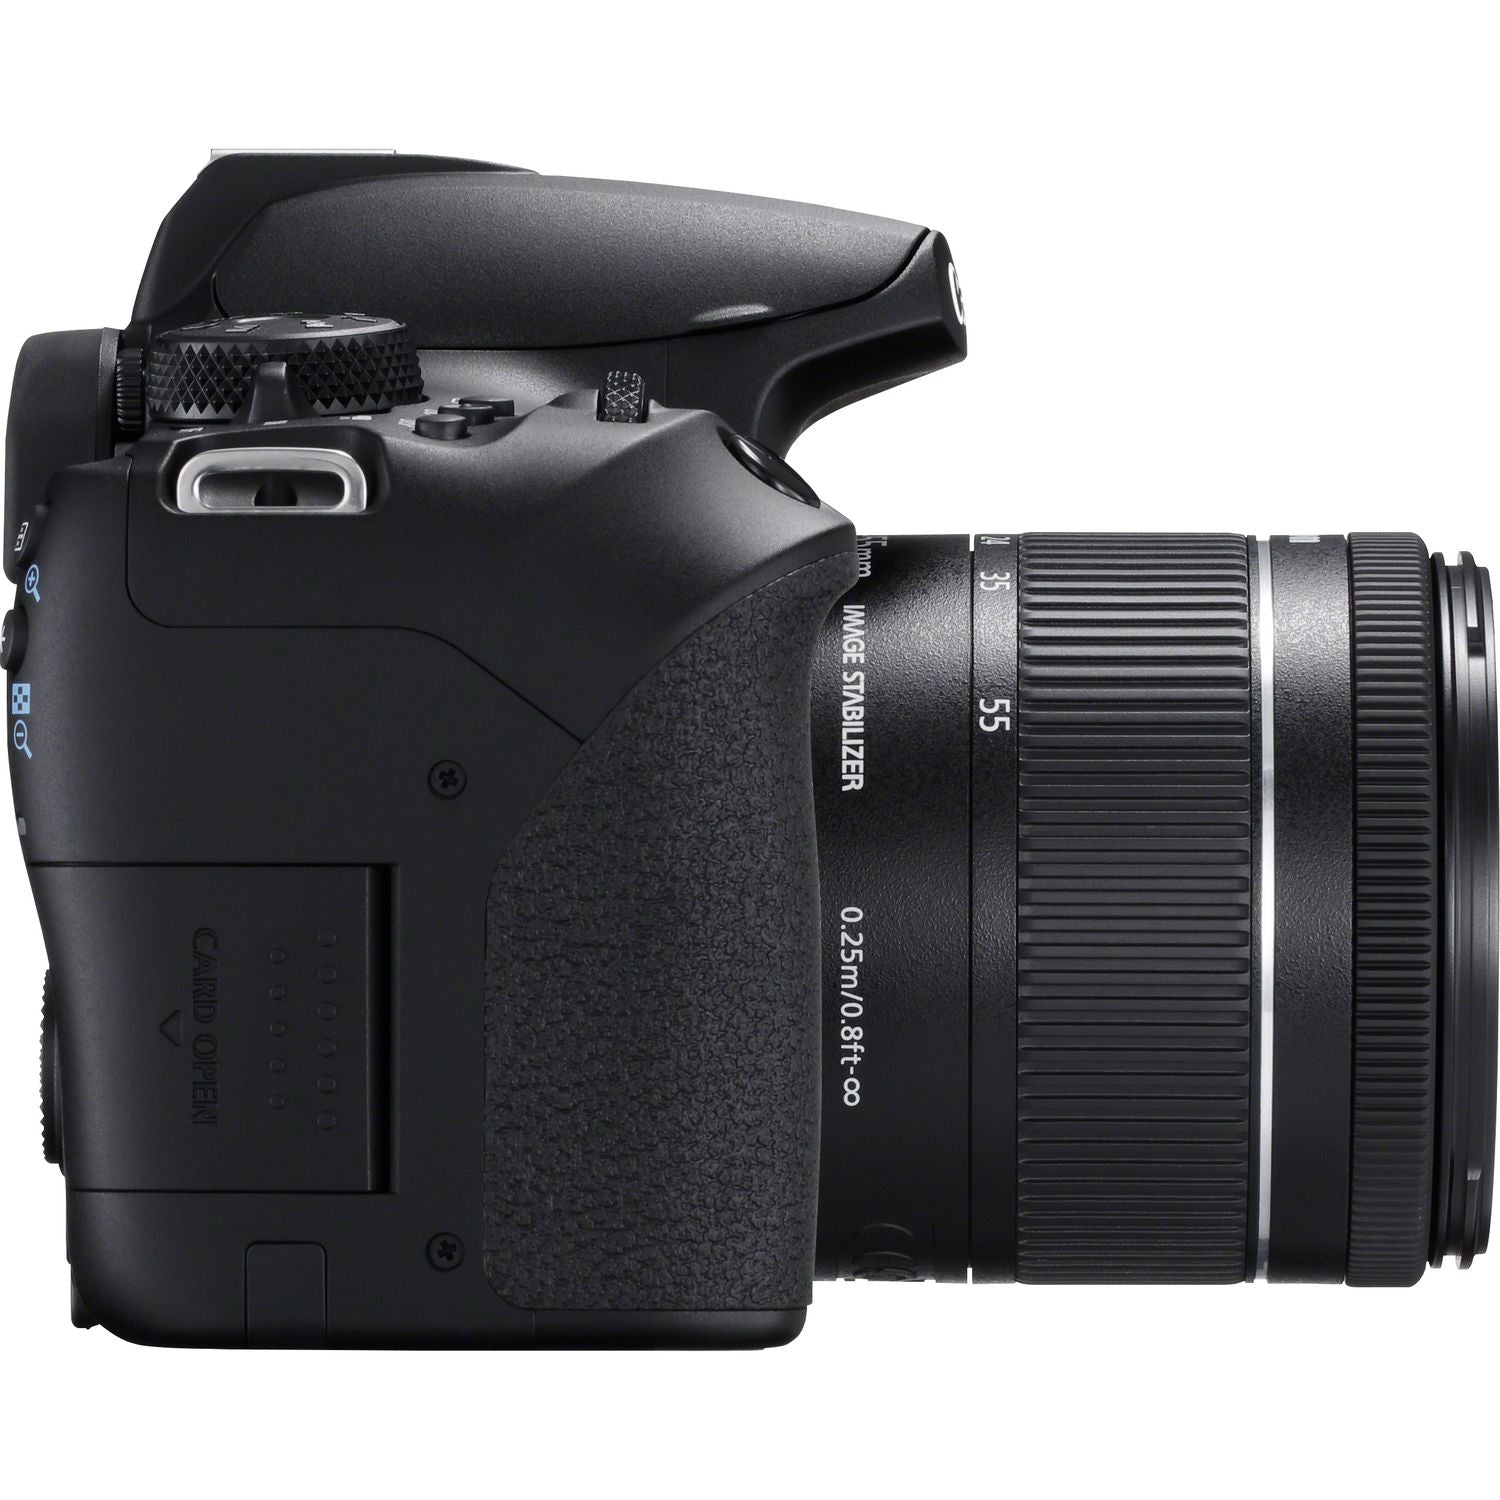 Canon EOS 850D Digital SLR Camera + EF-S 18-55mm f/4-5.6 IS STM Lens Kit